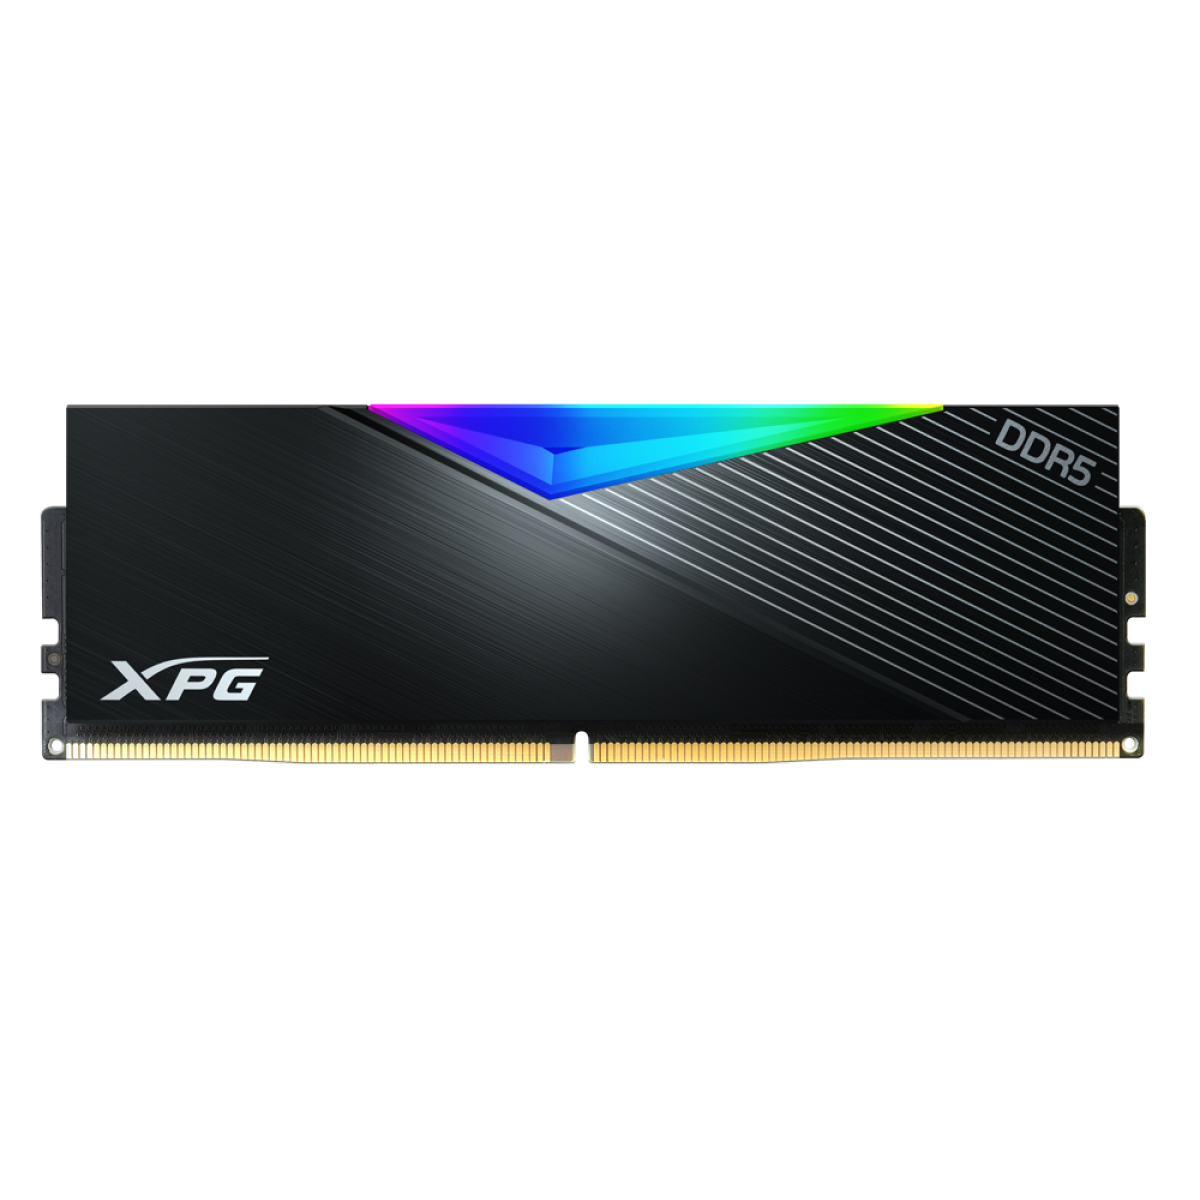 Memória DDR5 XPG Lancer RGB, 16GB, 5200MHz, Black, AX5U5200C3816G-CLARBK